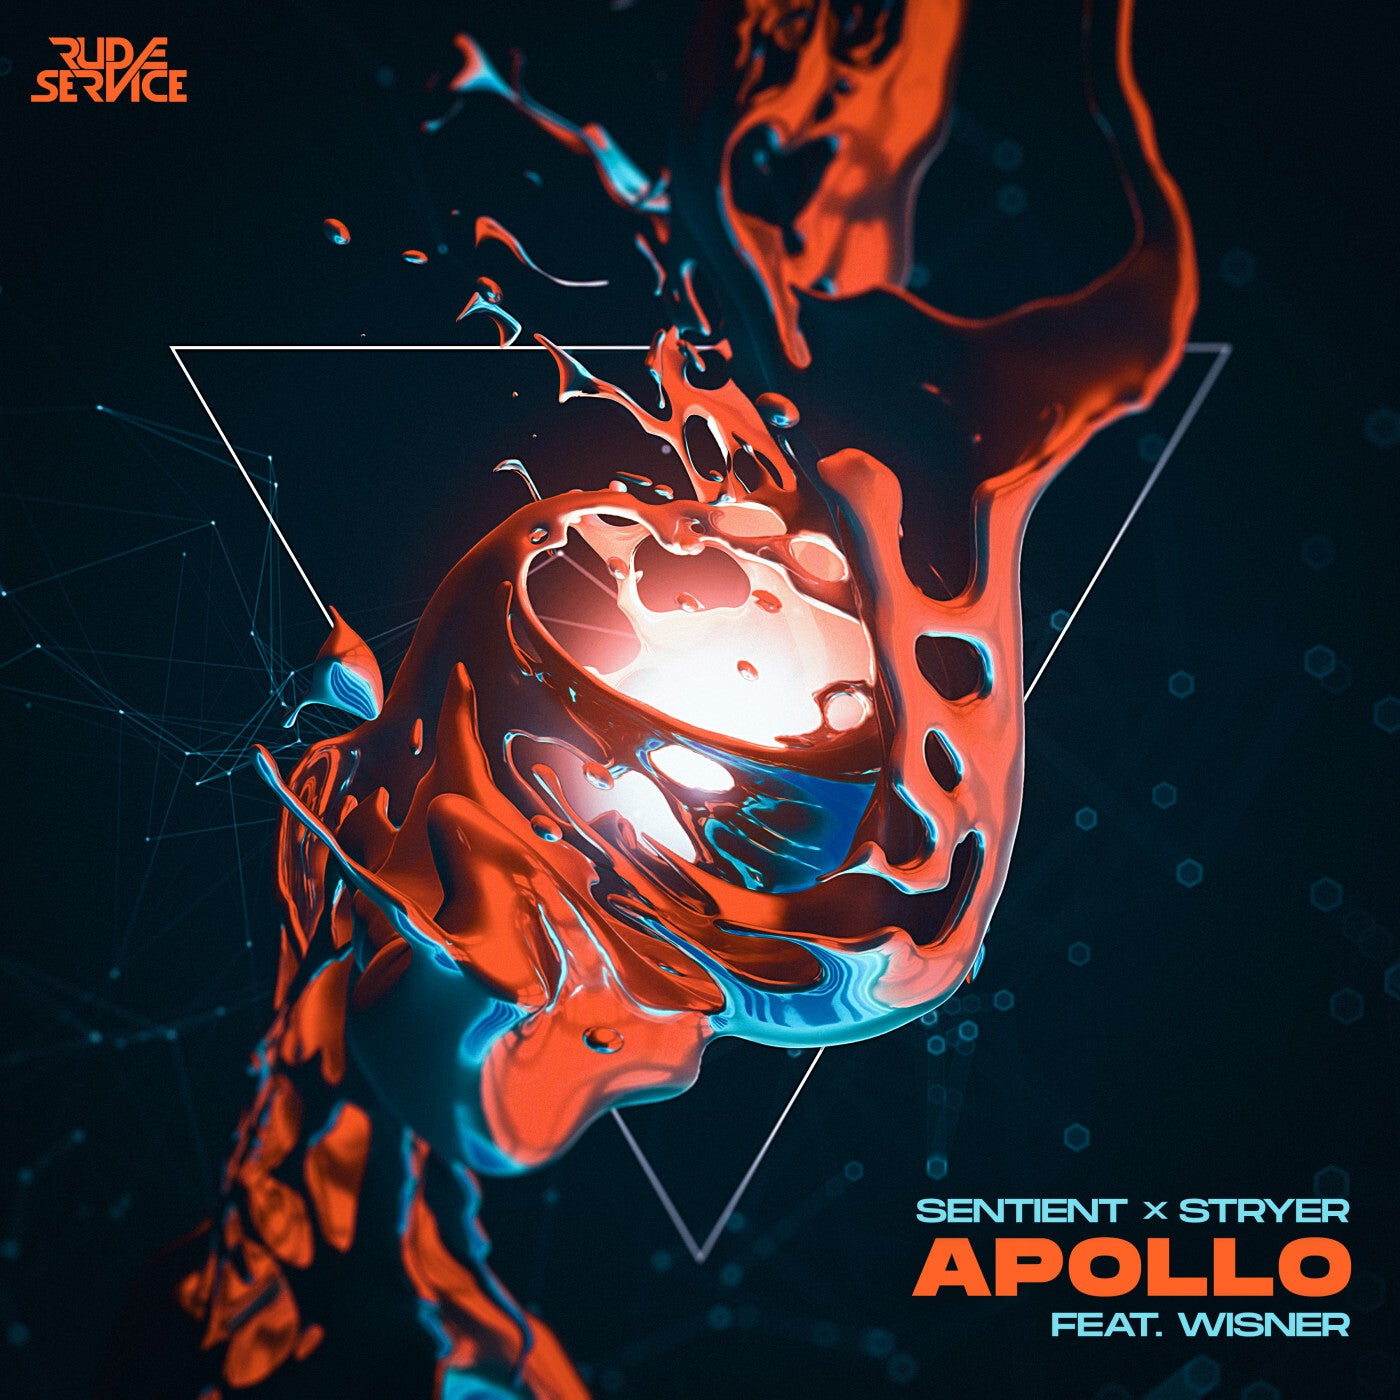 Apollo (feat. WISNER)